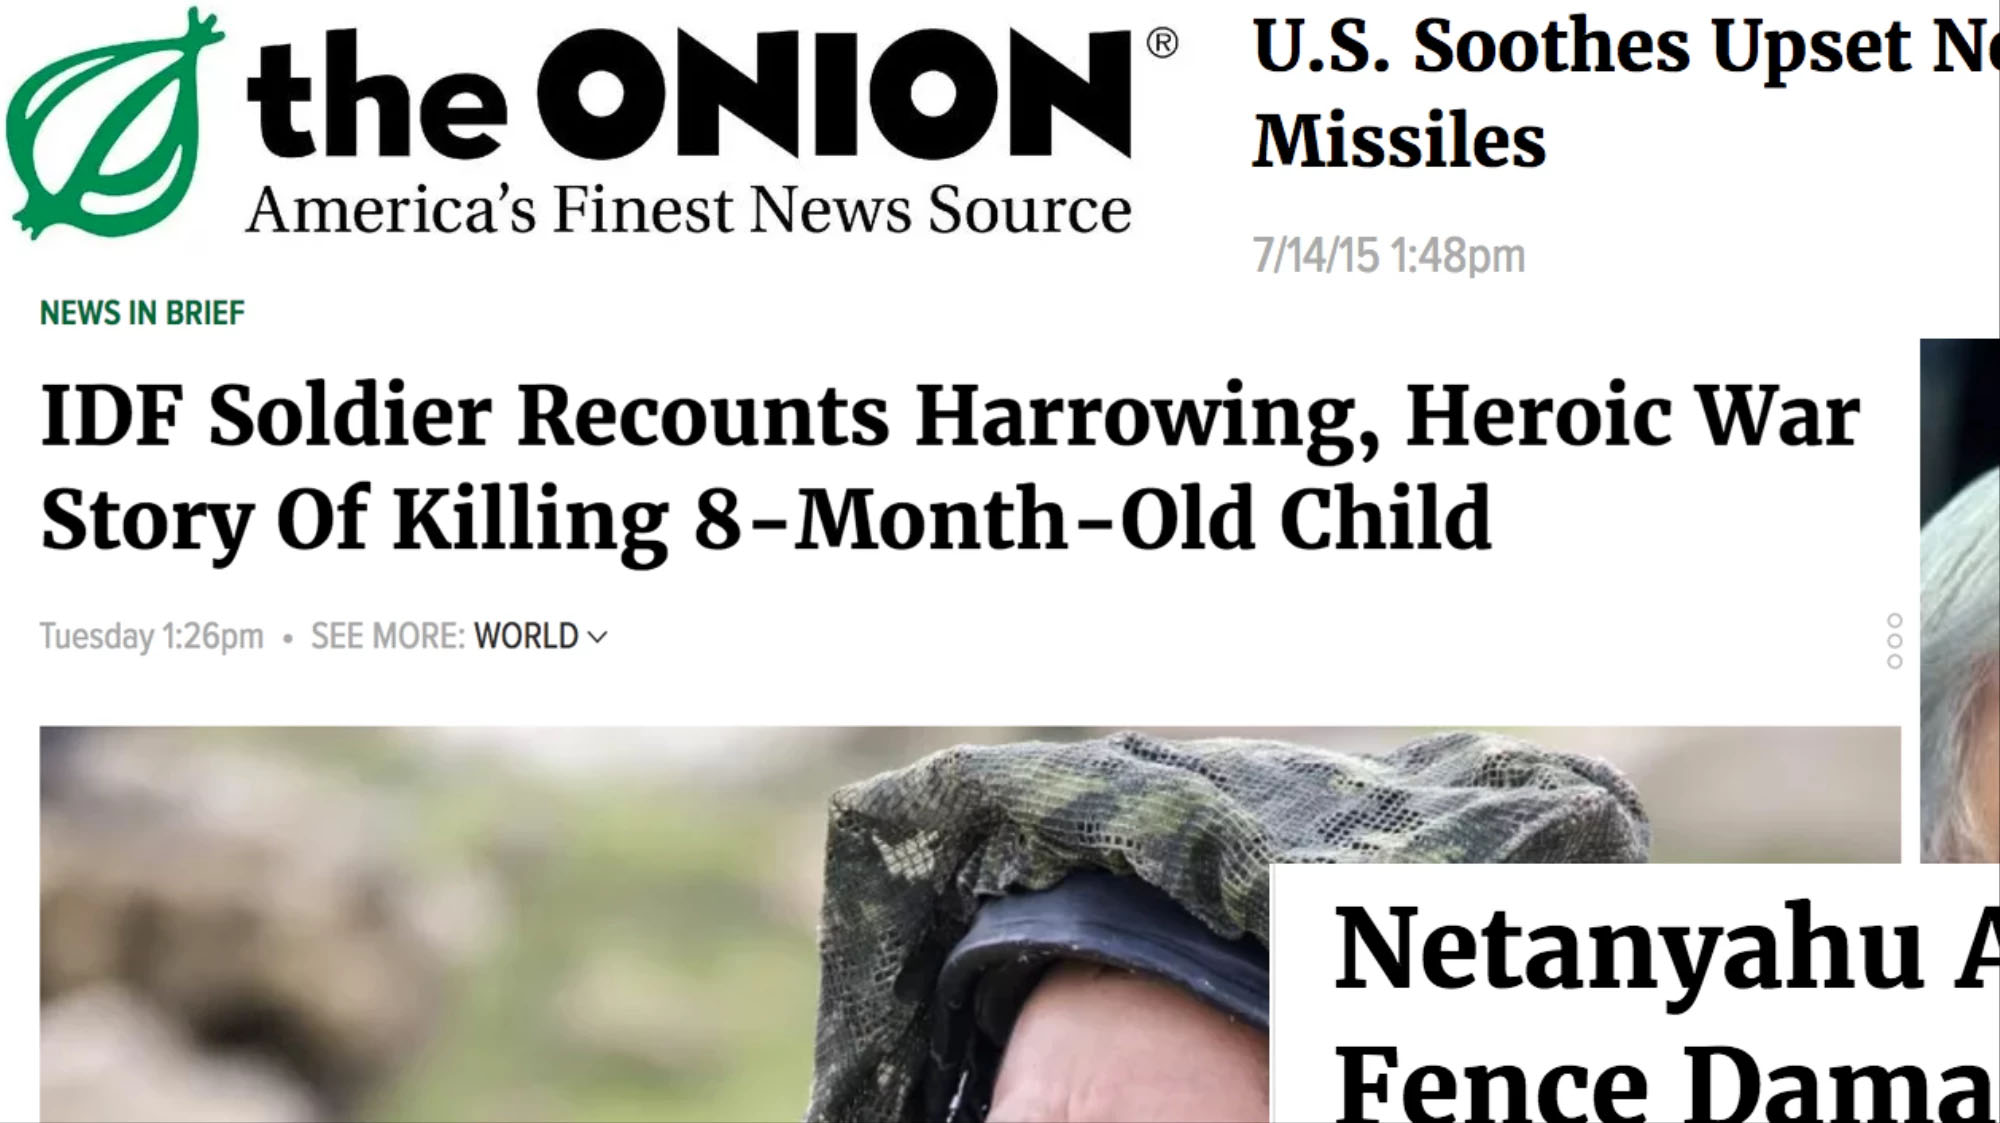 onion headline